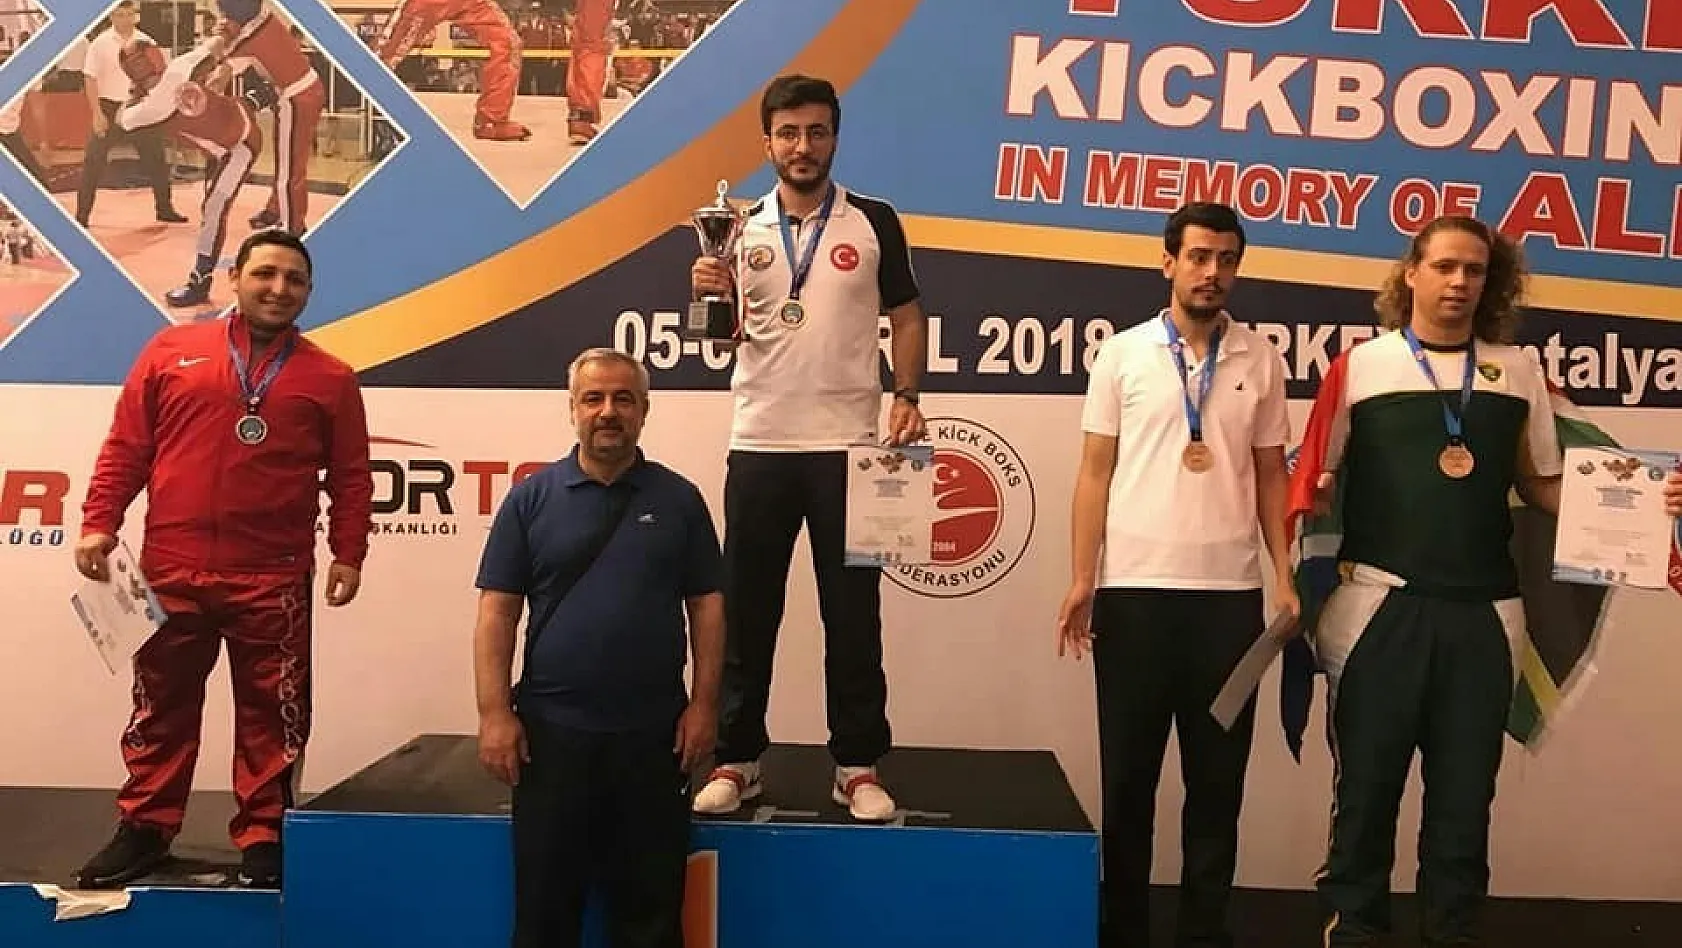 Malatya'dan Kick Boks Avrupa Şampiyonasına 2 sporcu 